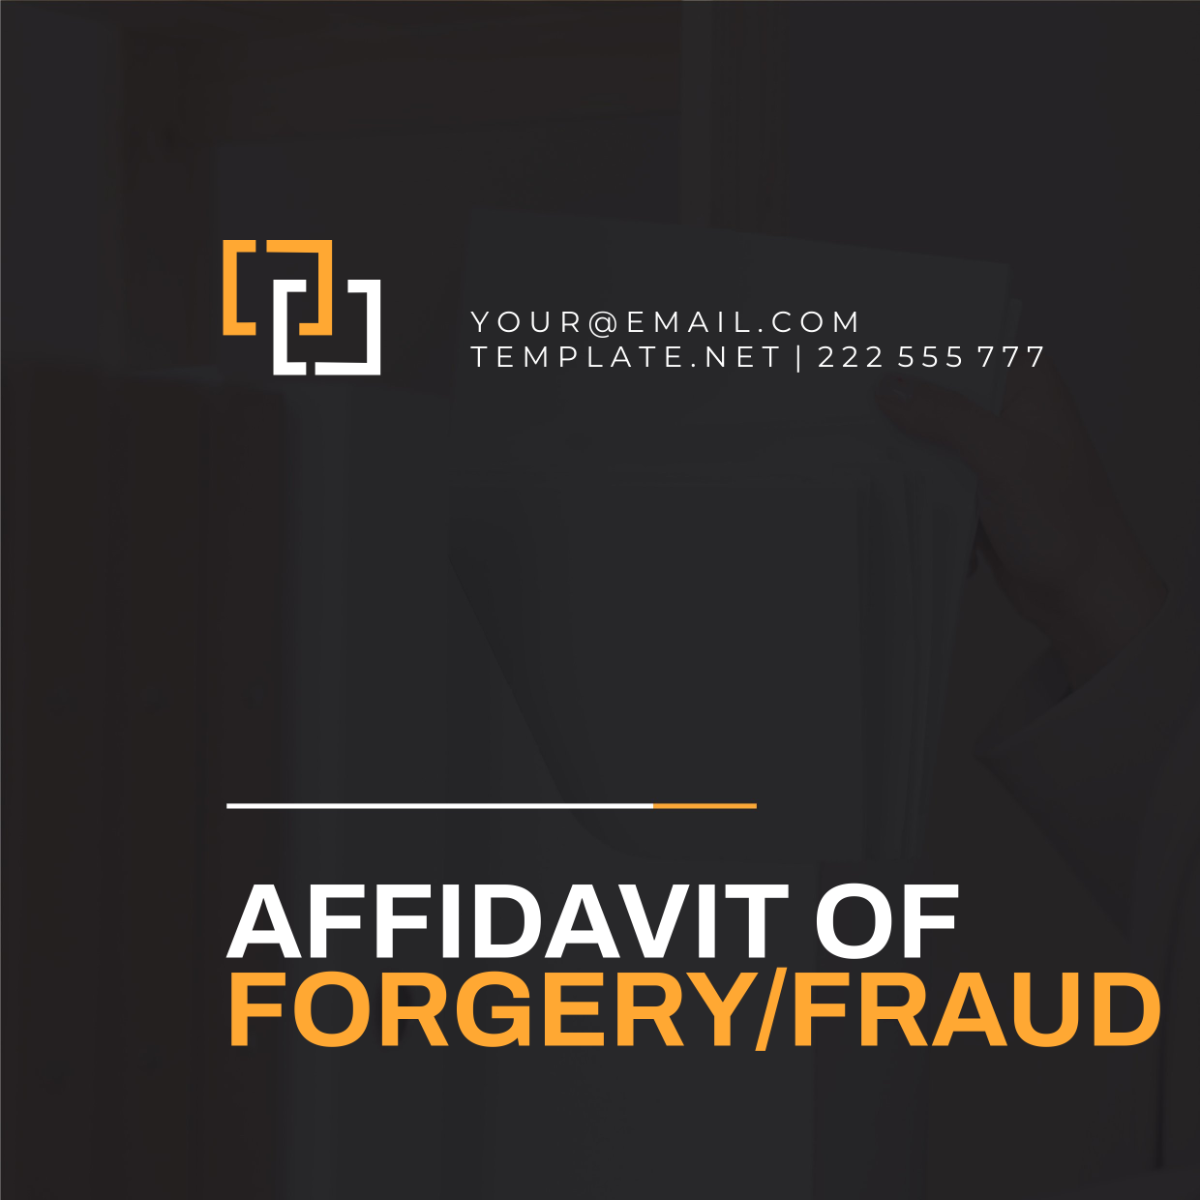 Affidavit of Forgery/Fraud Template